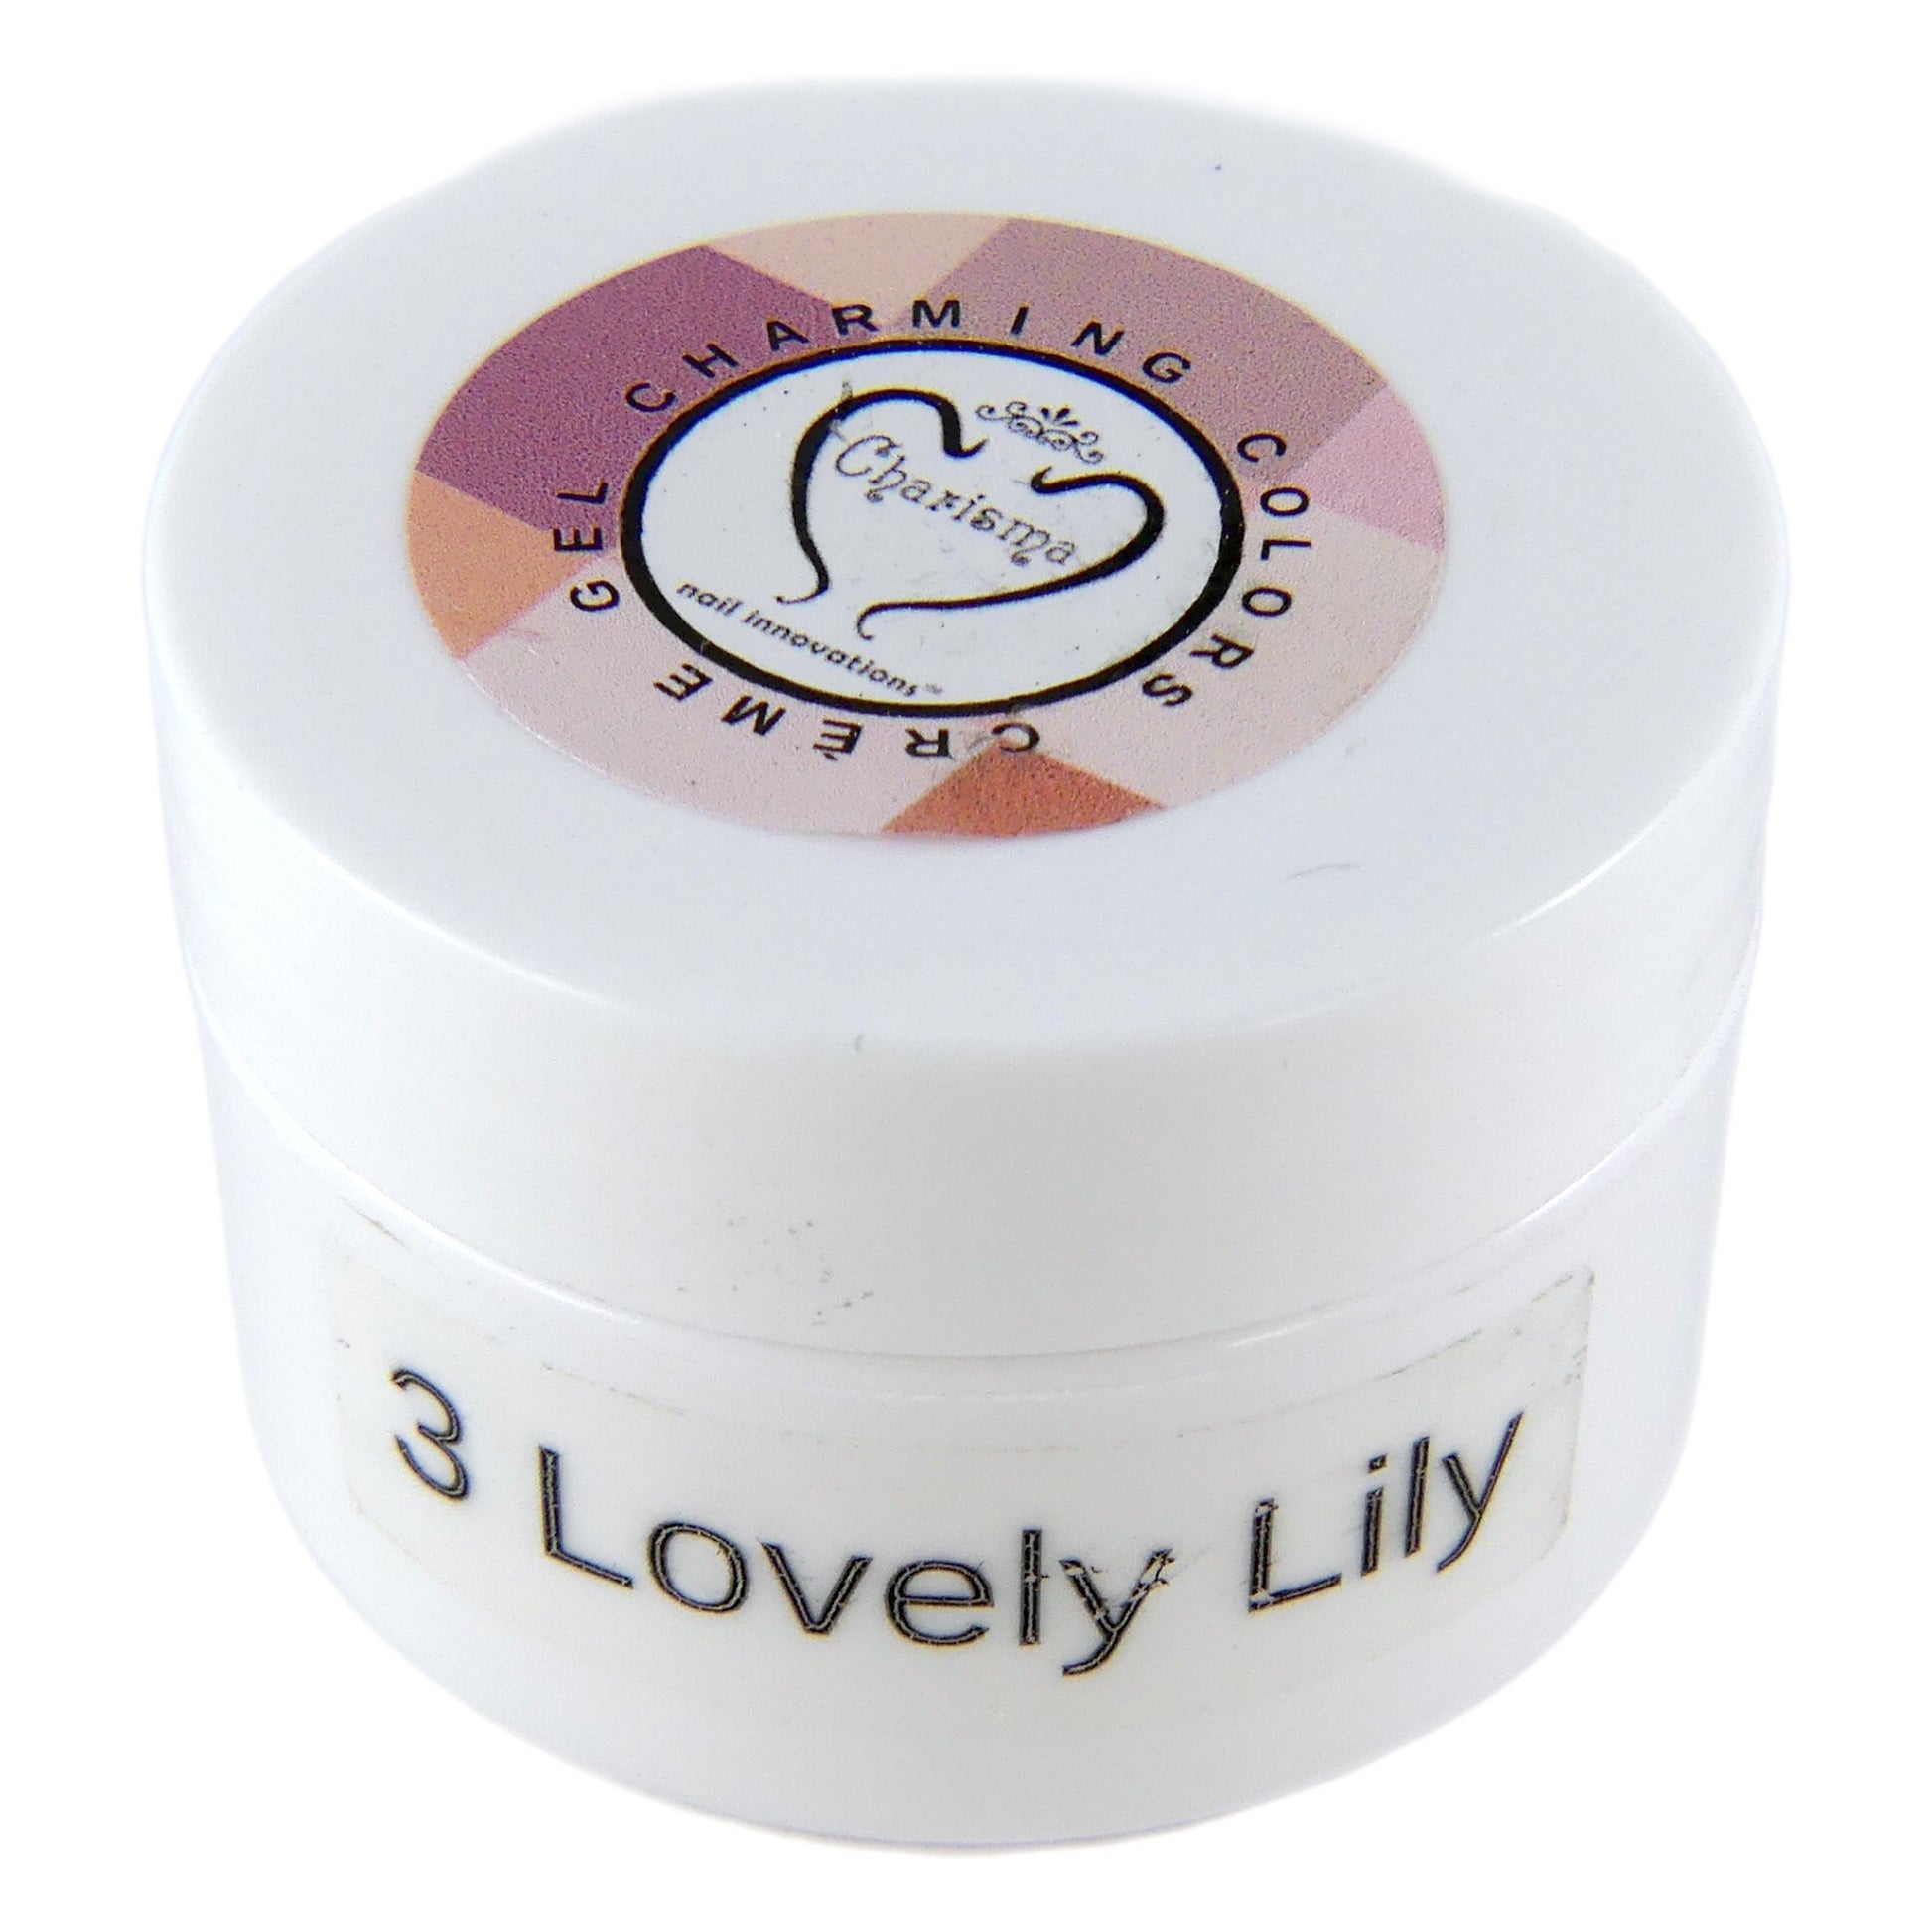 Builder Gel (Lovely Lily #3) 1/2 oz - My Little Nail Art Shop